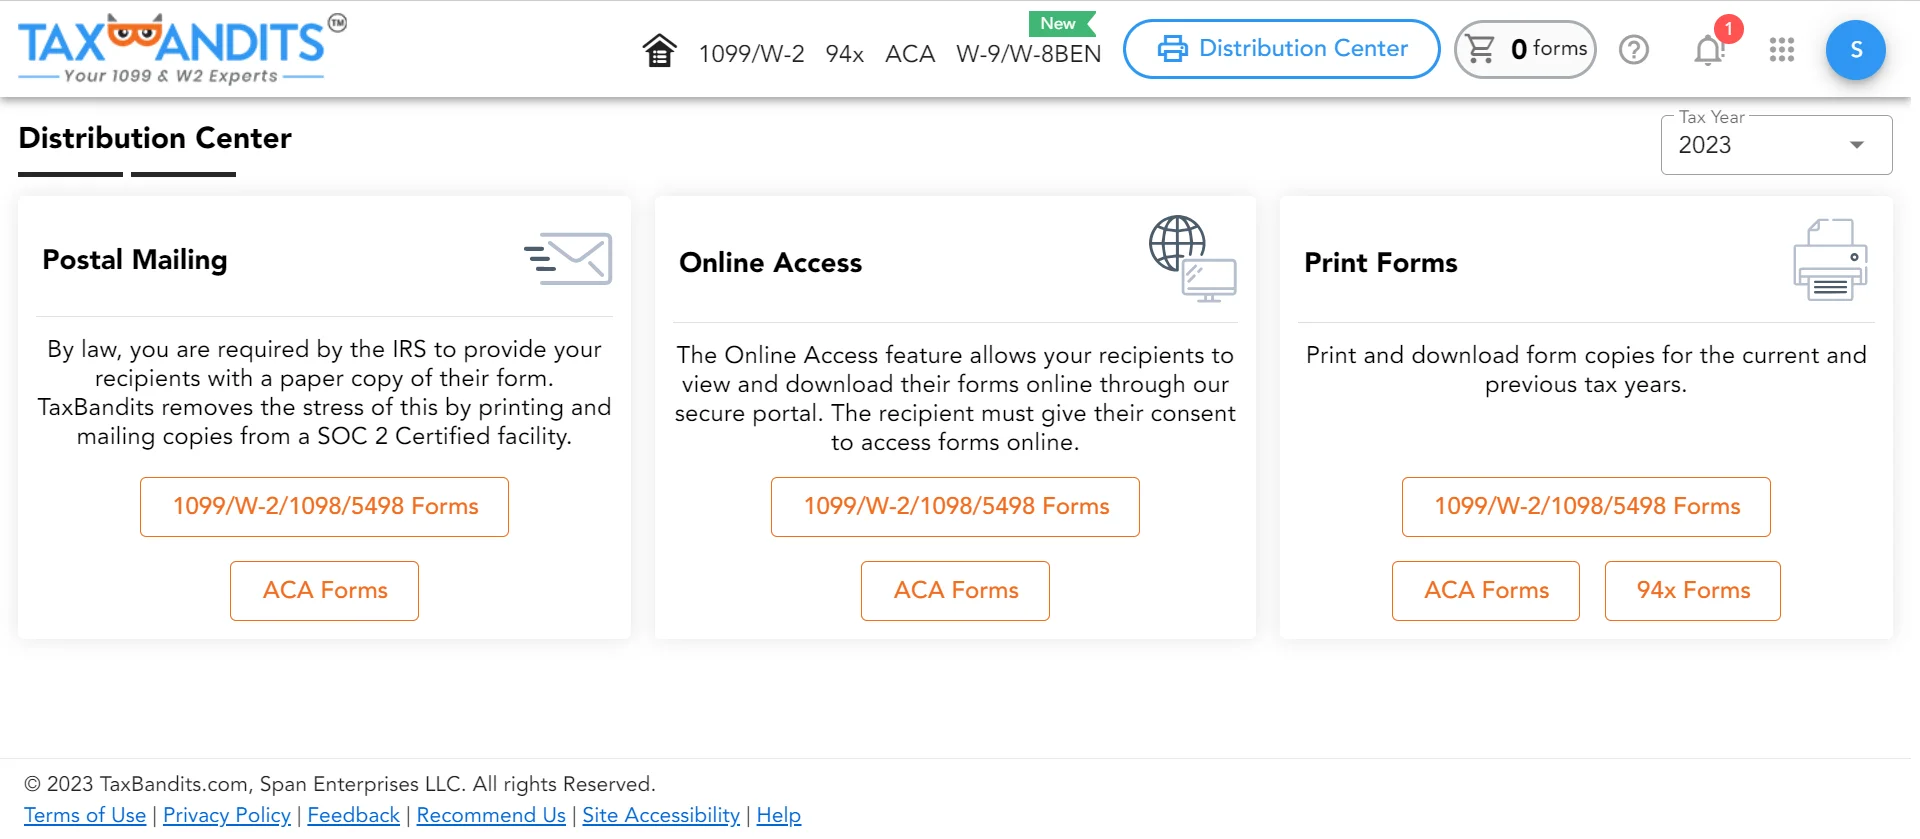 Deliver Recipient Copy(Online/Postal)